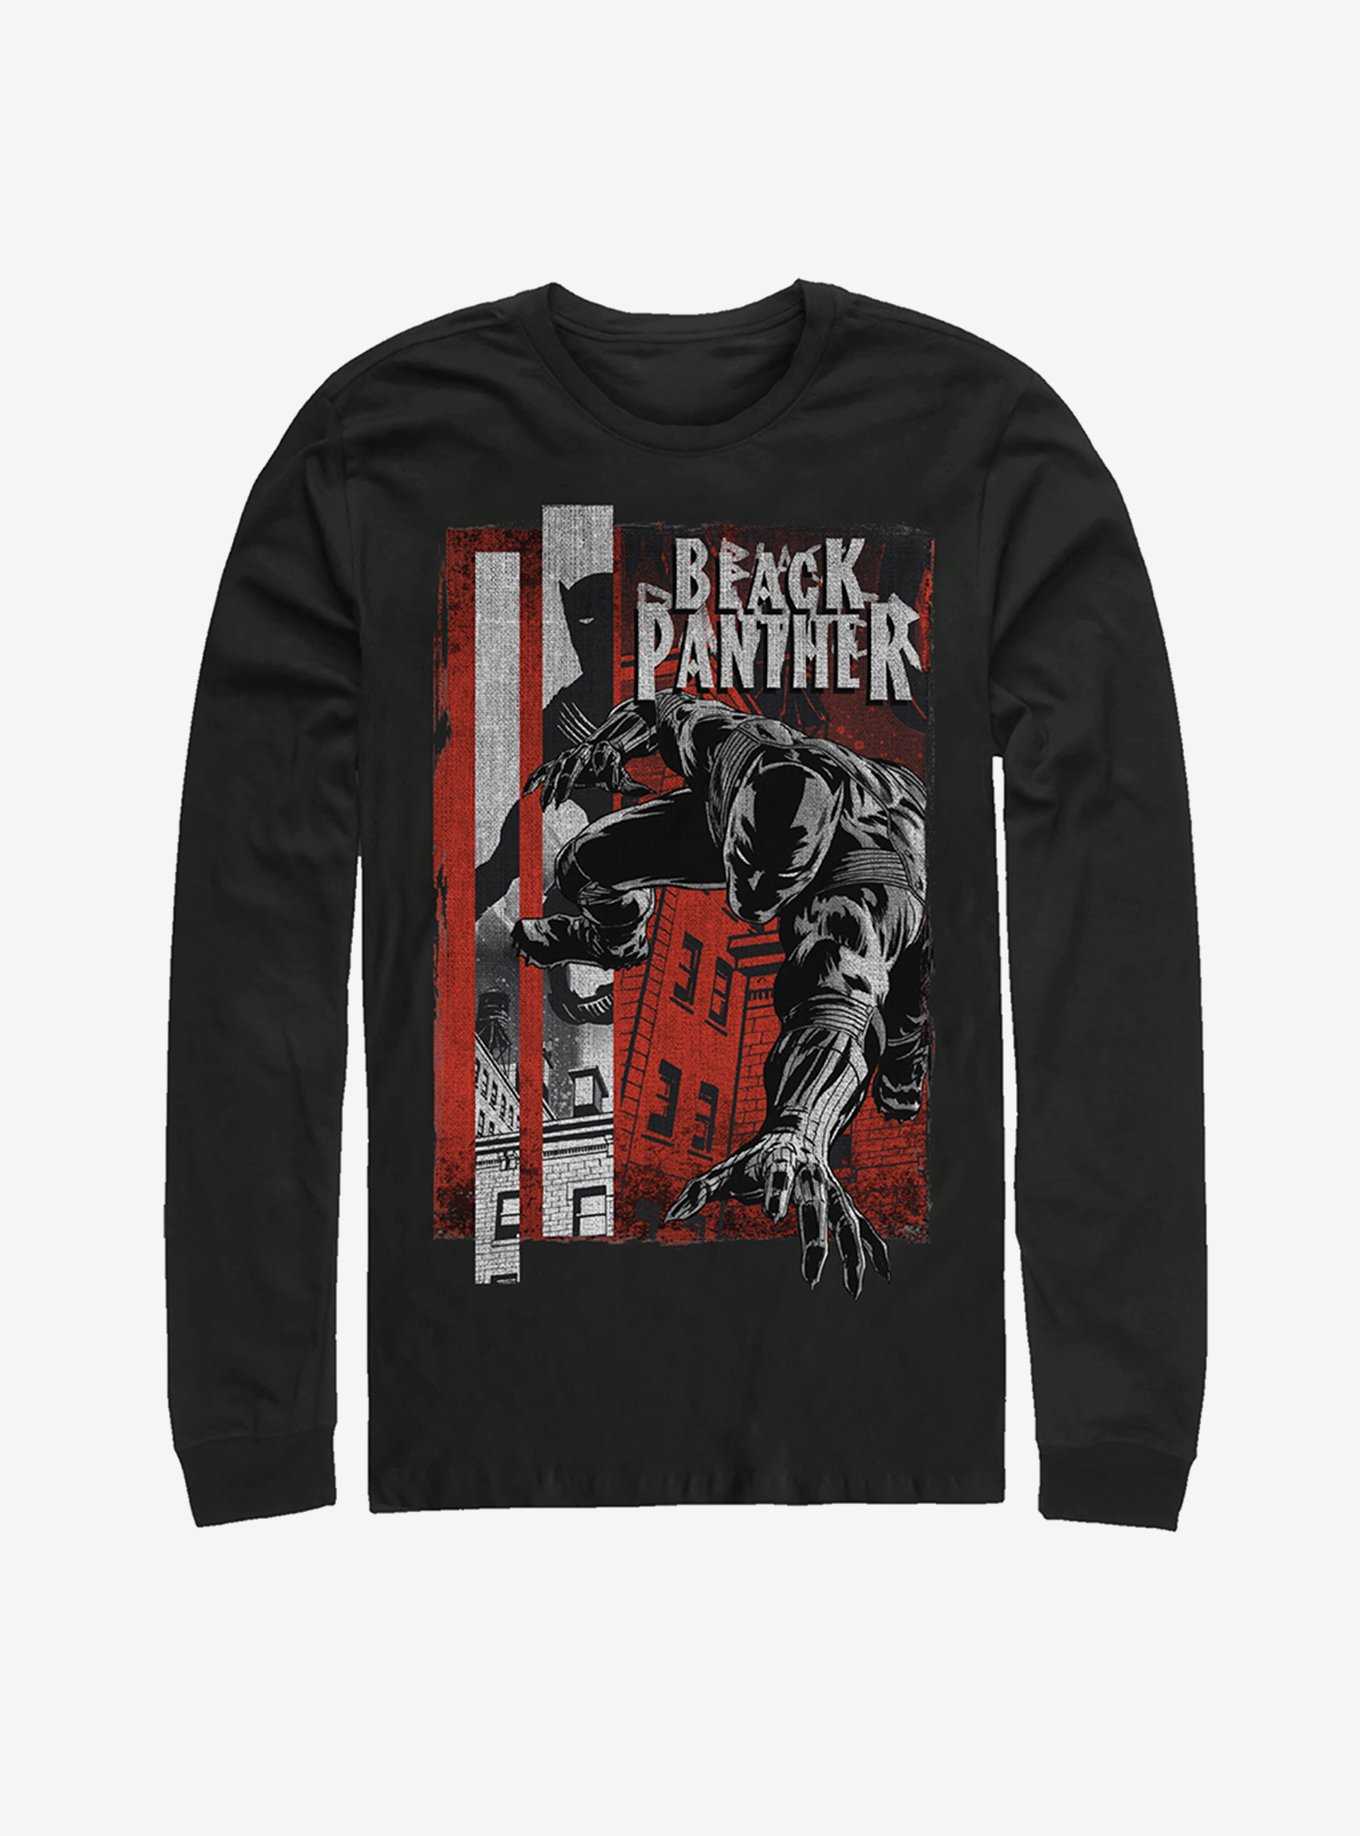 Marvel Black Panther Lurk Long Sleeve T-Shirt, , hi-res